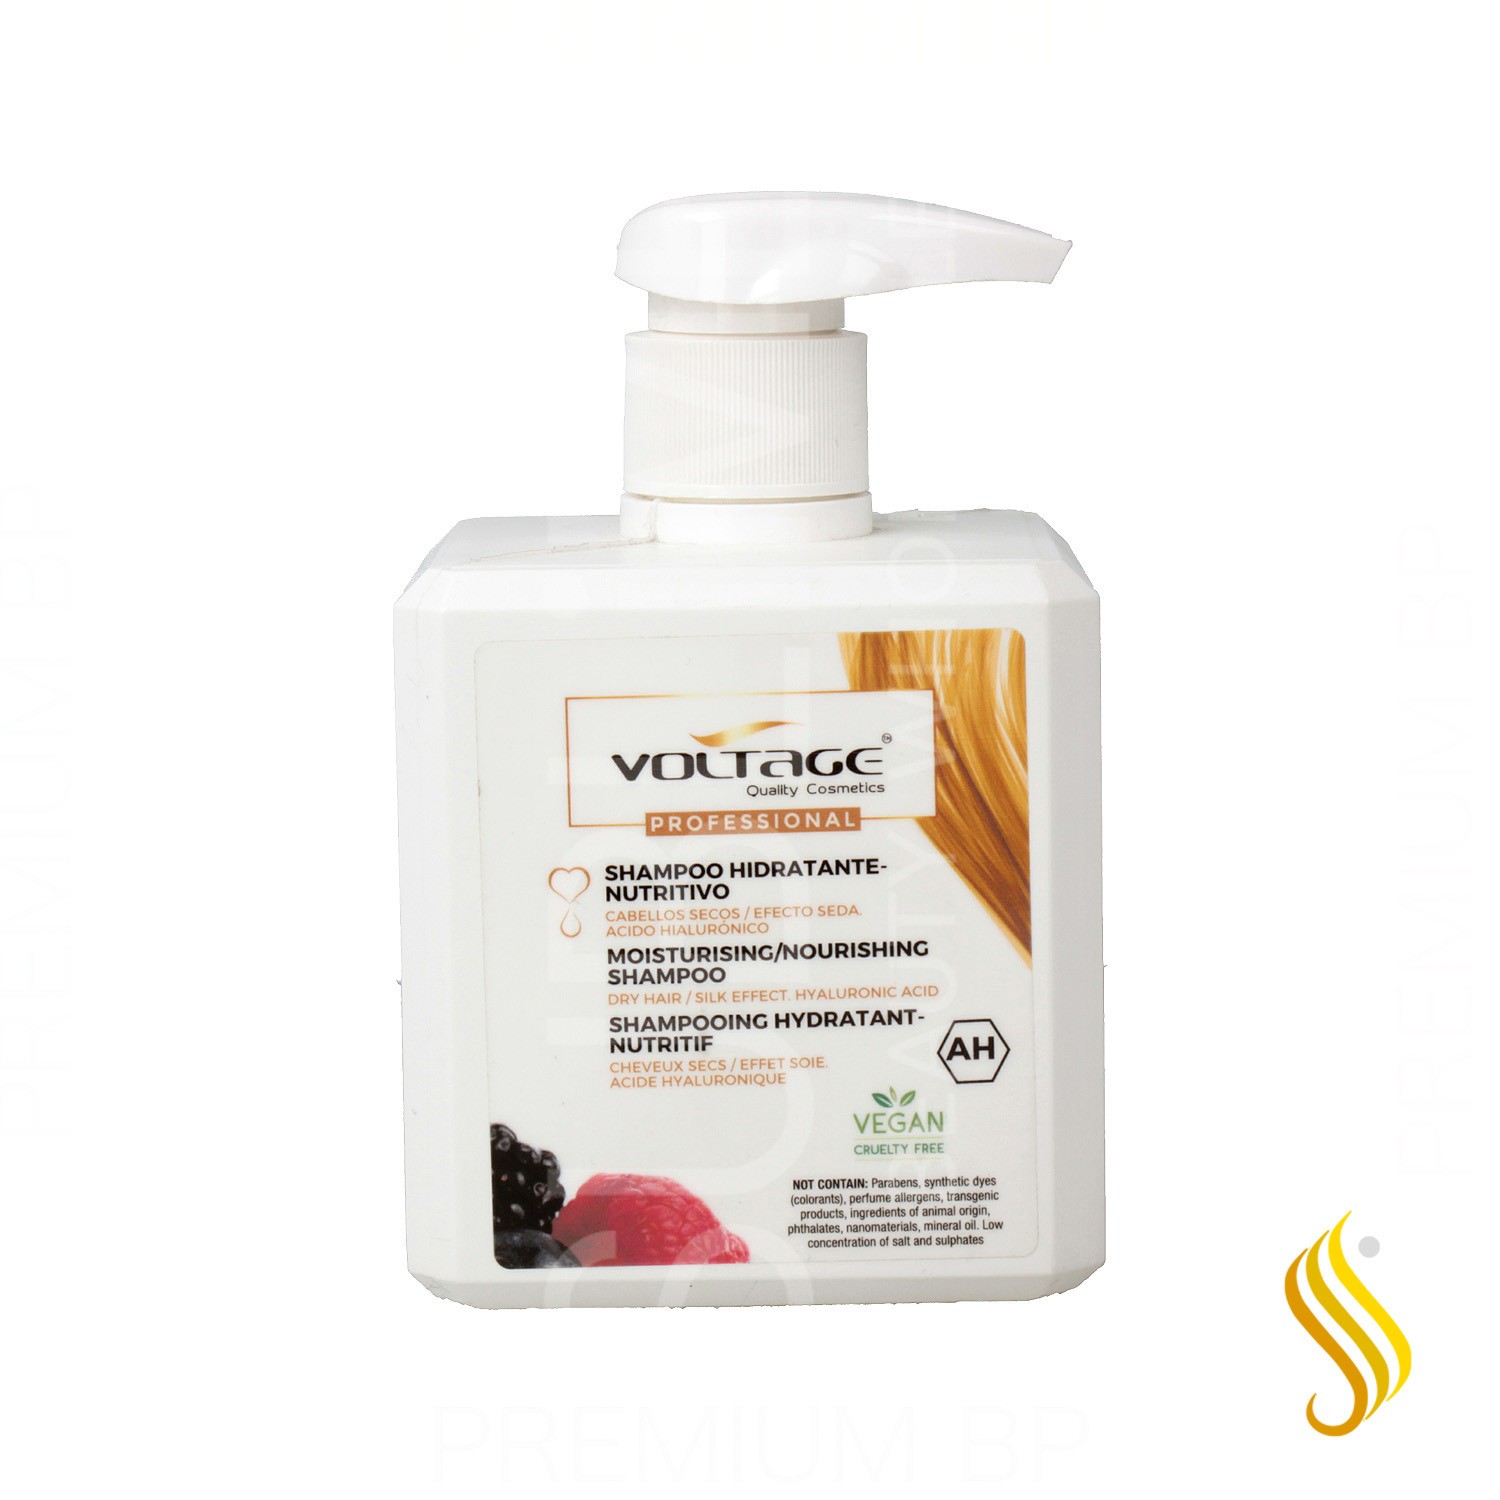 Voltage Professional Shampoo Moisturizing Nutritious 450 Ml (b)